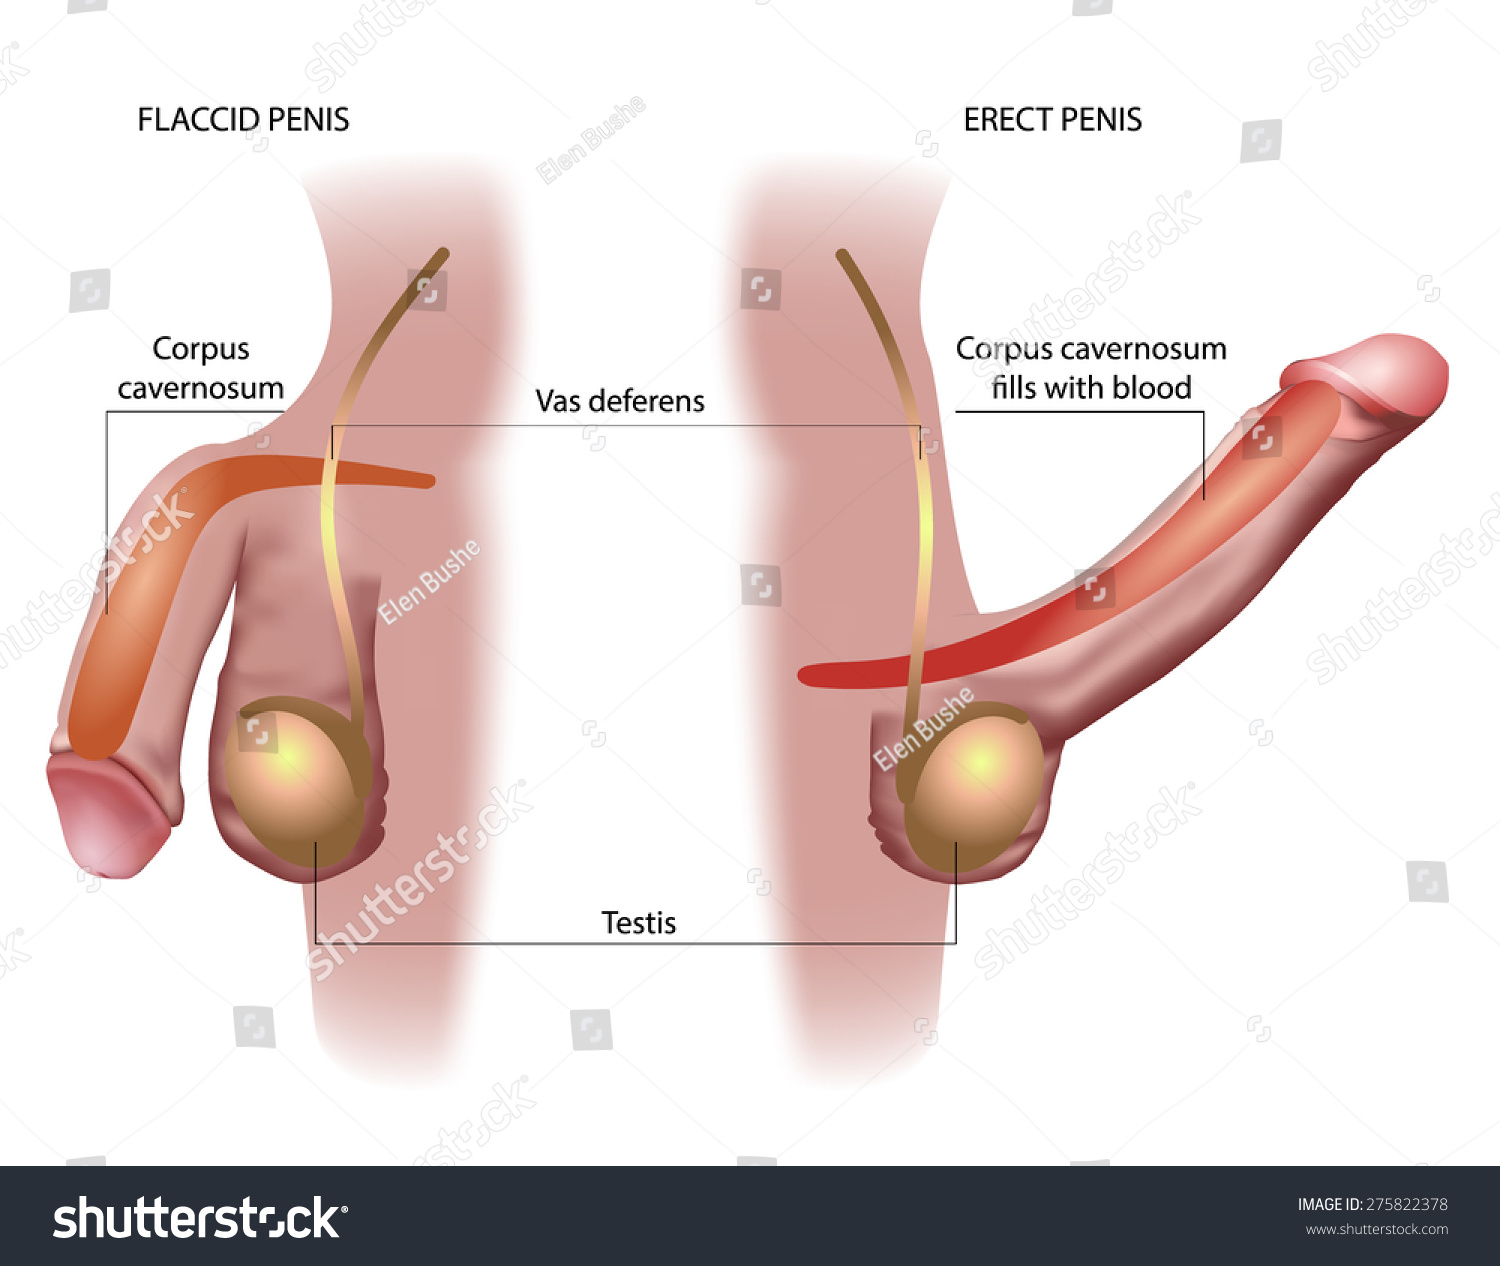 Penis Erection Pic 110